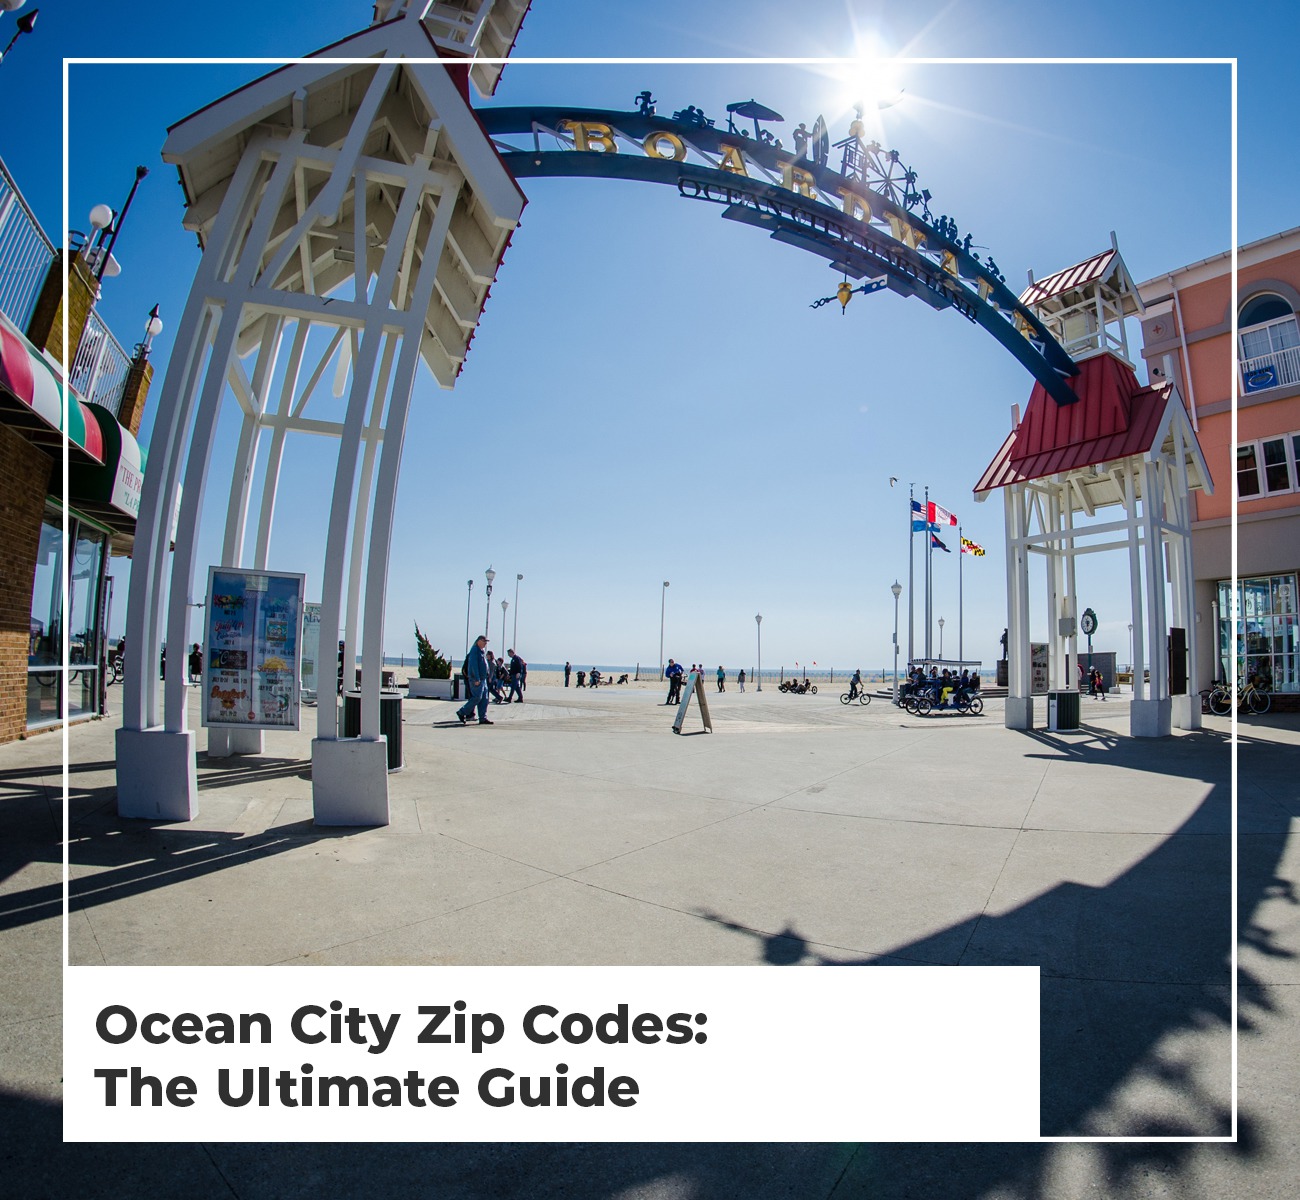 Ocean City Zip Codes: The Ultimate Guide